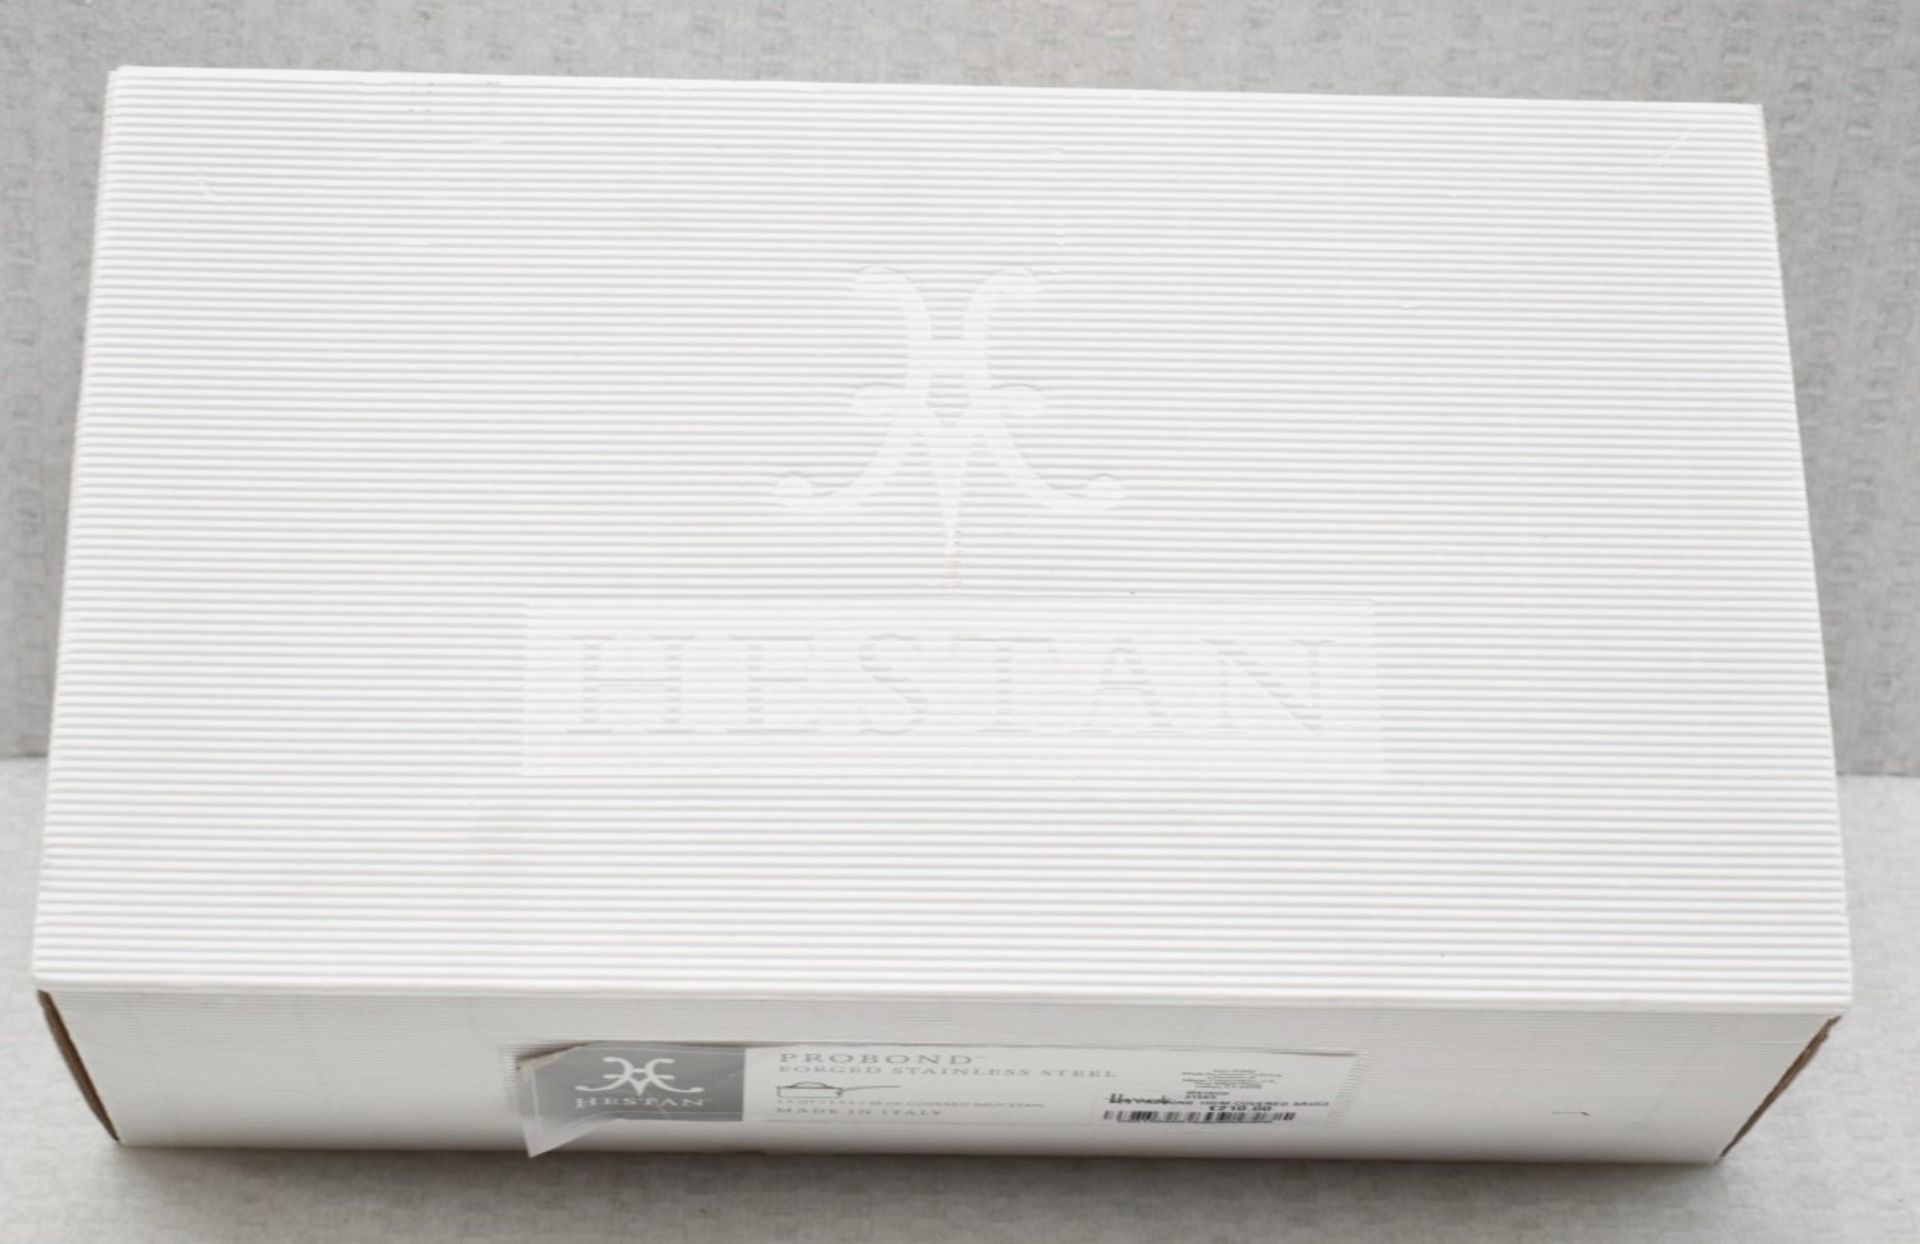 1 x HESTAN ProBond Professional Standard Stainless Steel Saucepan with Lid (16cm) - Original - Image 10 of 10